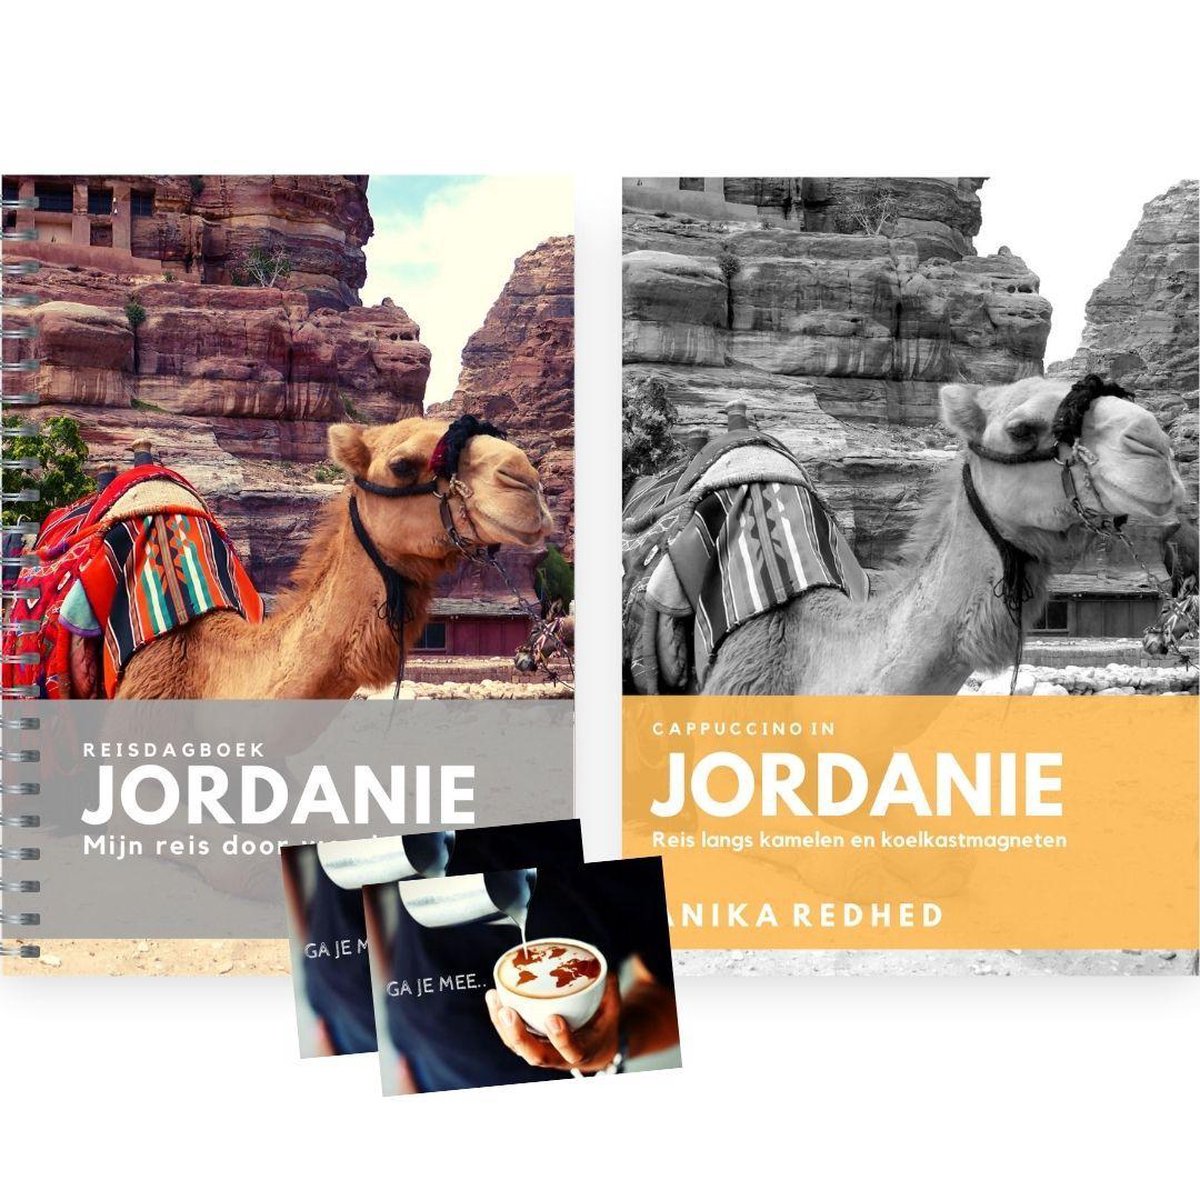 Jordanië reisset - cadeau pakket - Reisverhaal Jordanië en Reisdagboek Jordanië - vakantiepakket